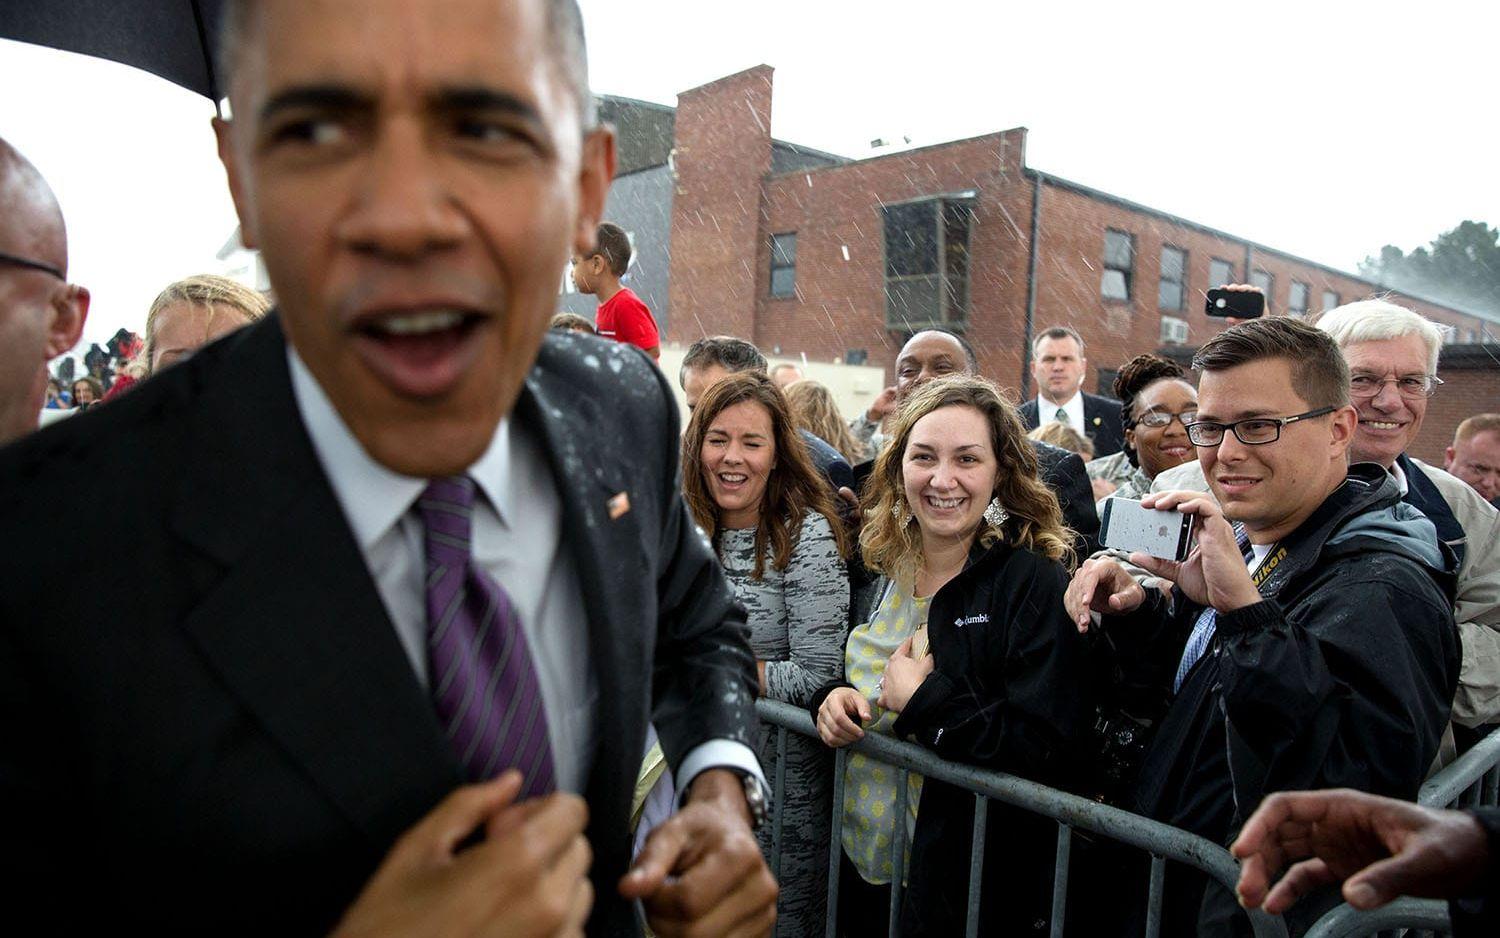 1 juli, 2015: Regnet öser ner medan presidemt Obama skakar hand med supportrar i Nashville. Foto: Pete Souza / Vita Huset